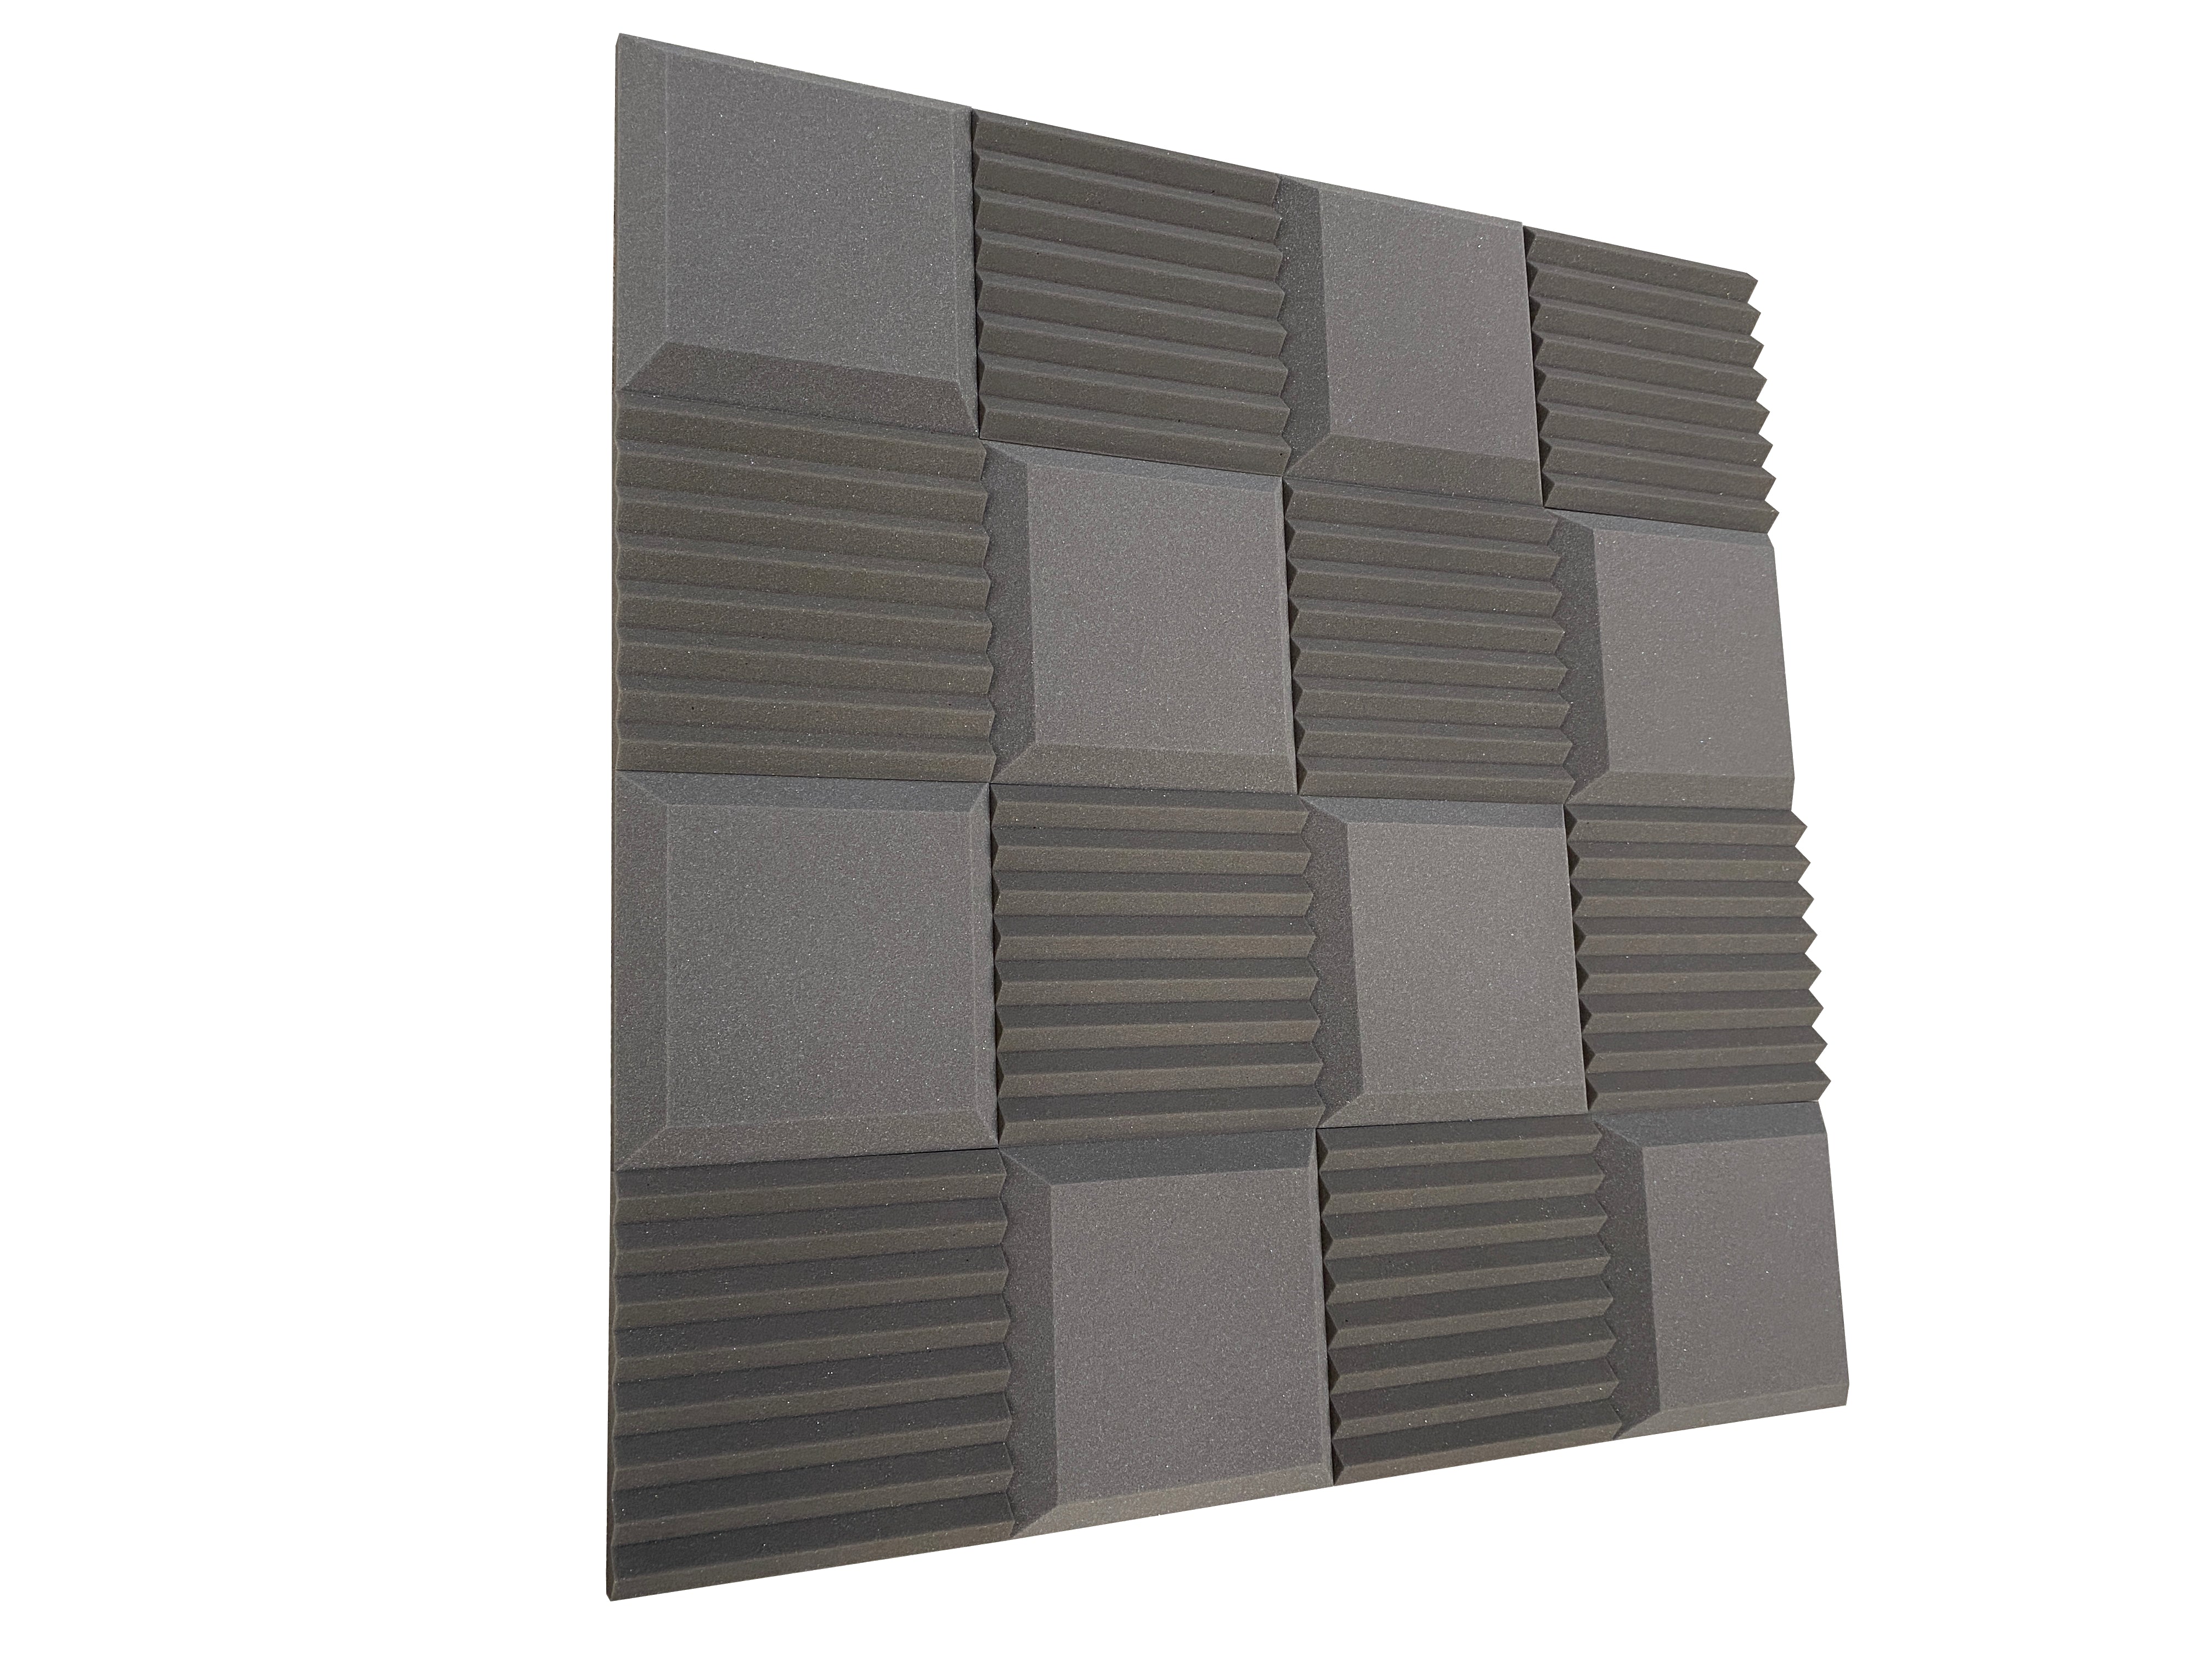 Euphonic Wedge Standard 12" Acoustic Studio Foam Tile Pack